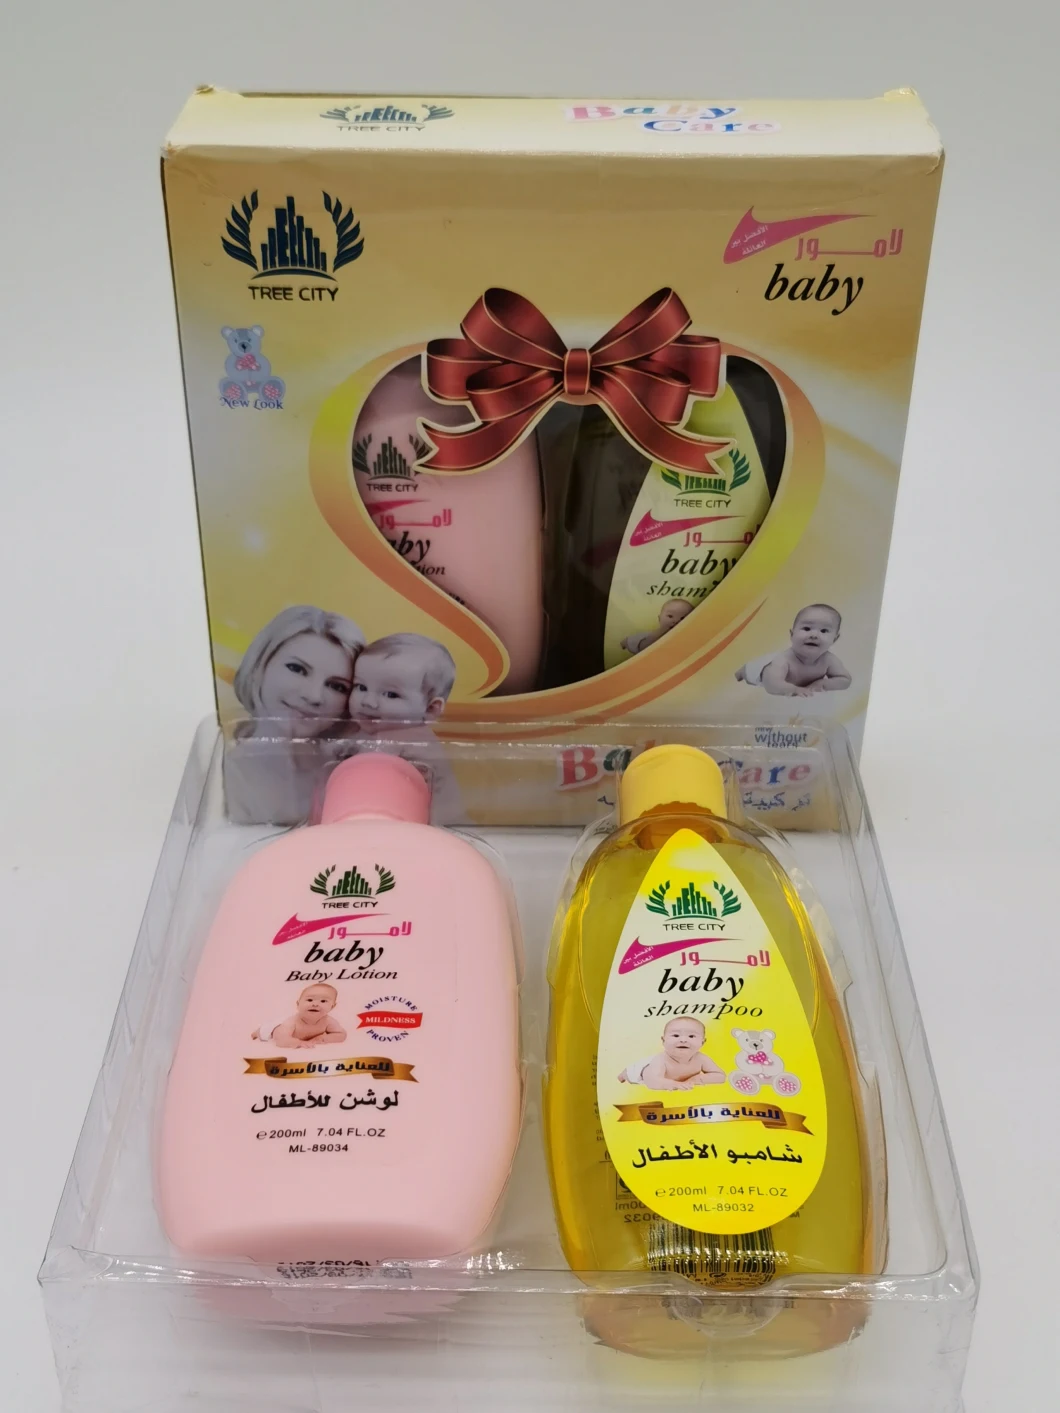 Tree City 2 in 1 Moisturizing Lotion Baby Skin Care Kit OEM for Factoy Baby Body Milk